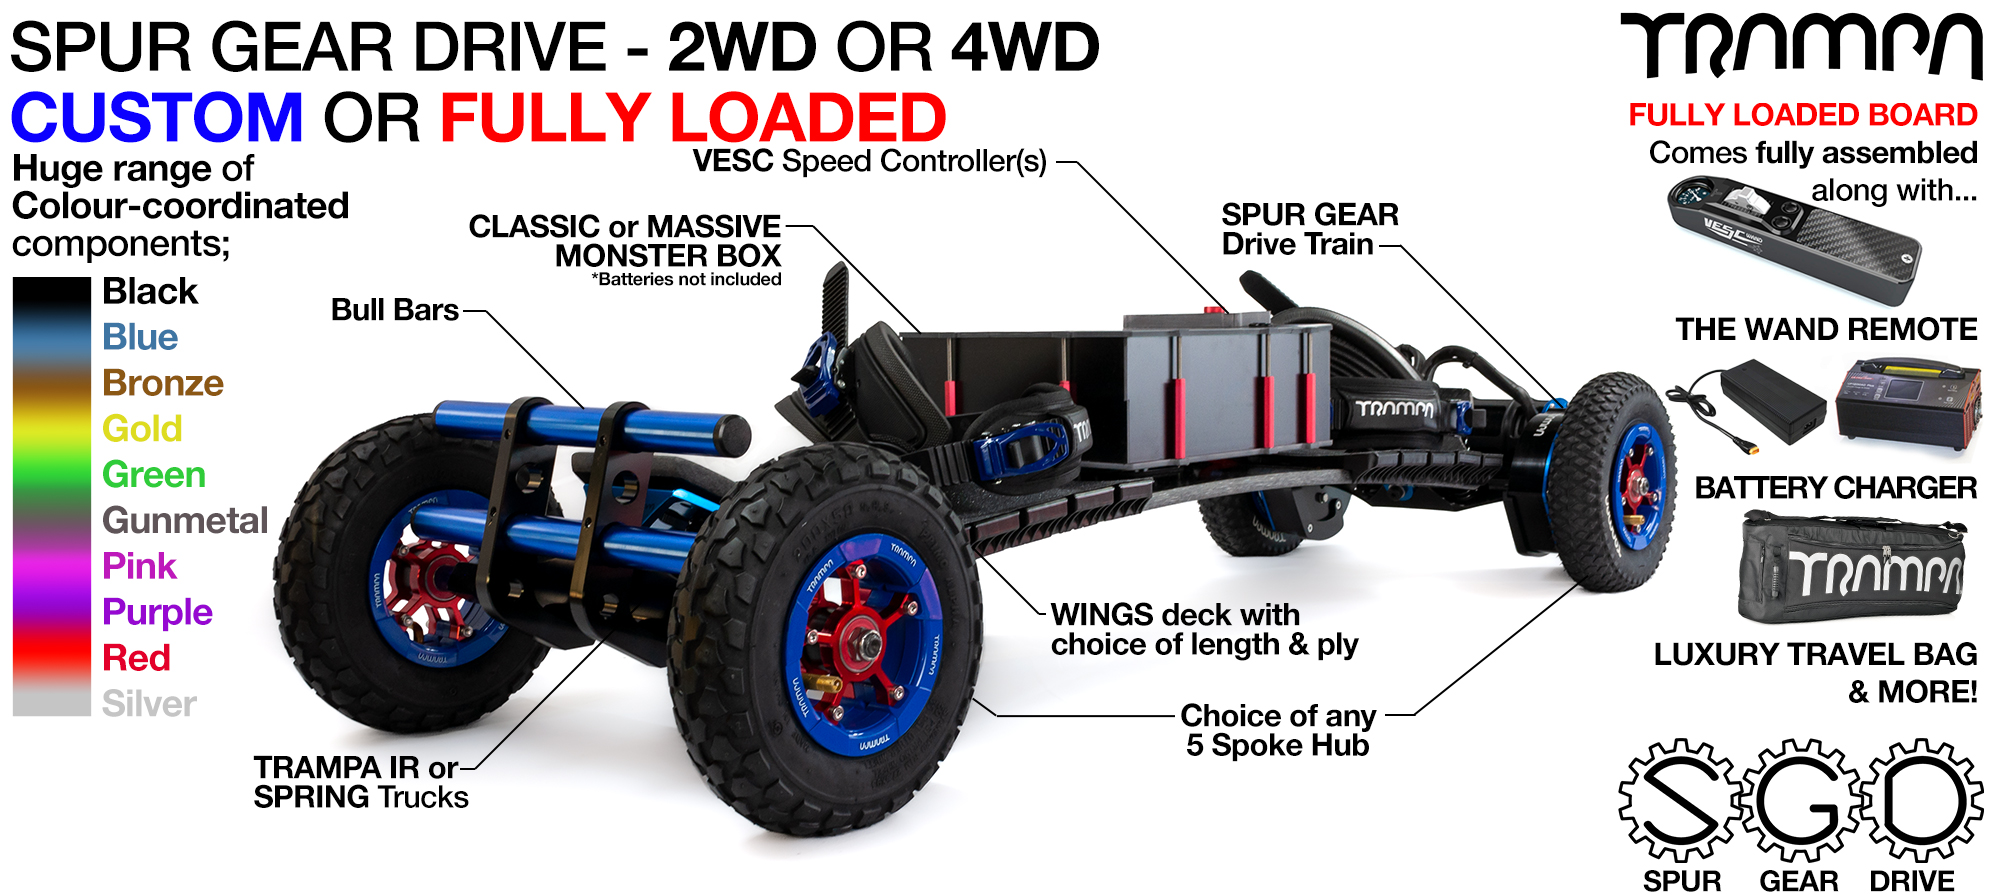 2WD SPUR GEAR DRIVE Electric Mountainboard - CUSTOM 